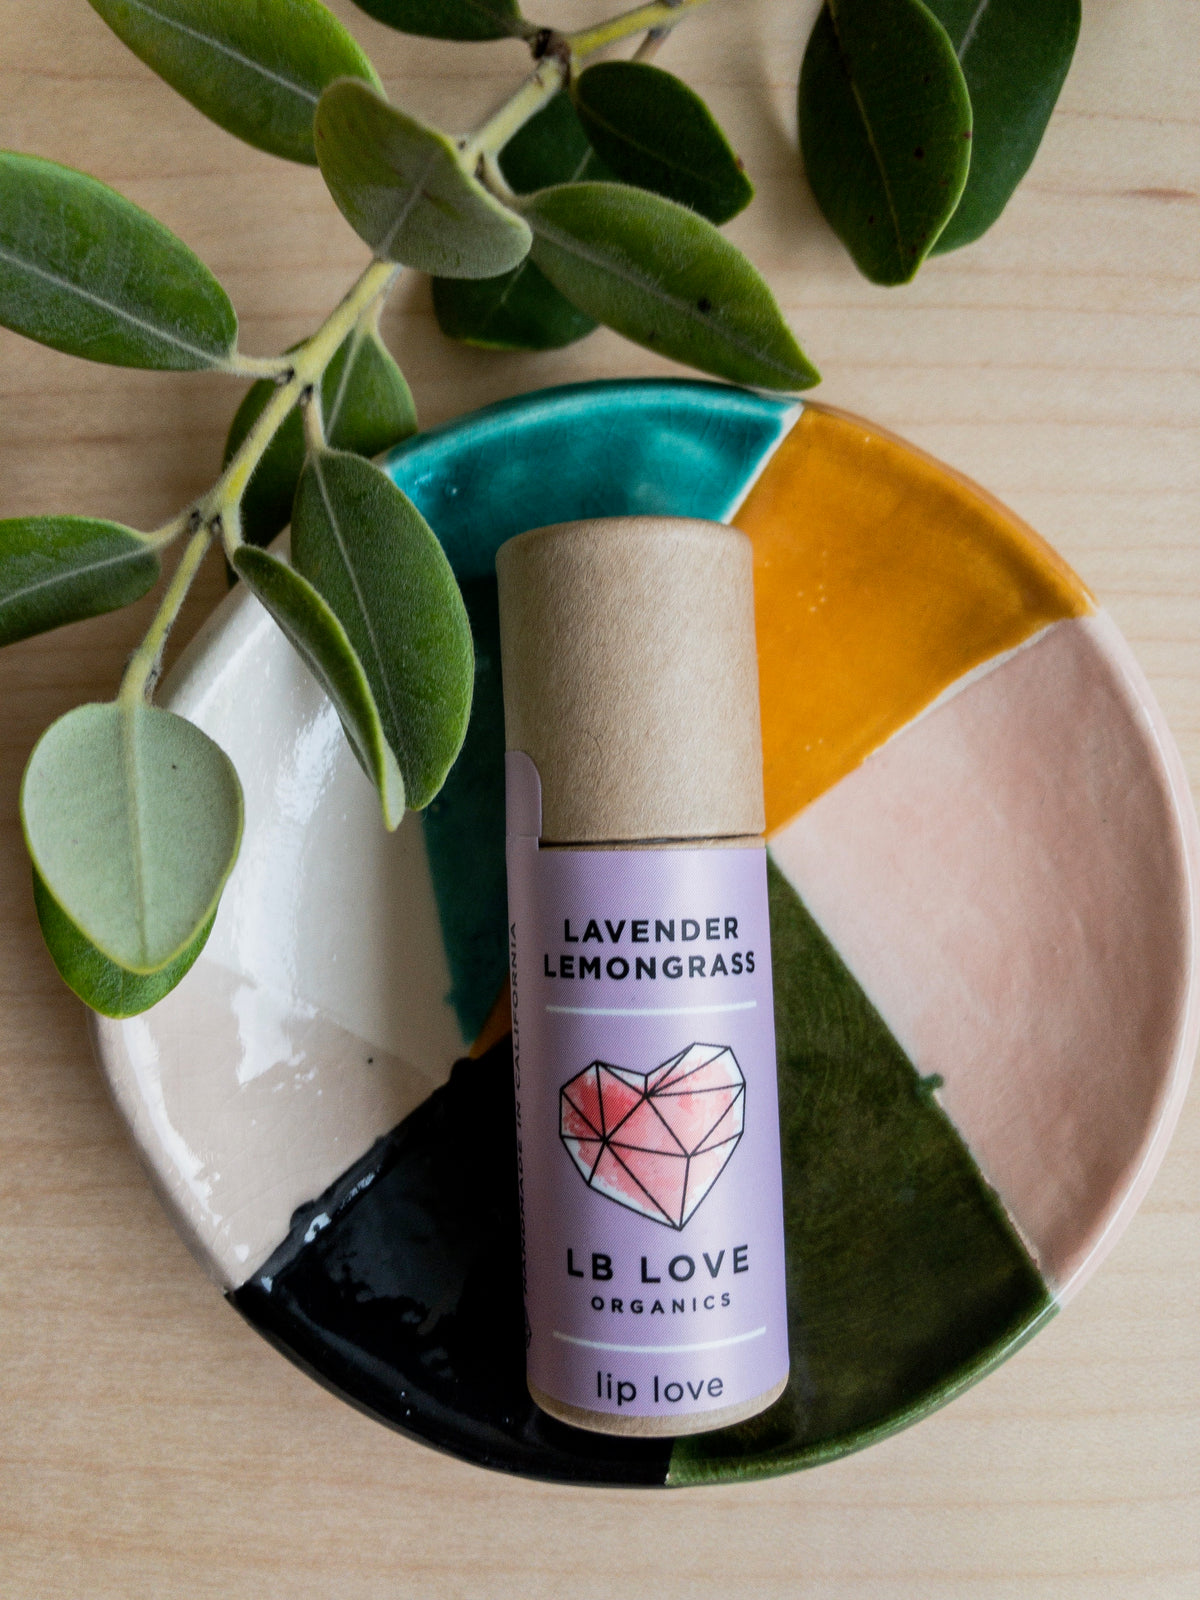  Love Organics lip balm zero waste tube lavender lemongrass